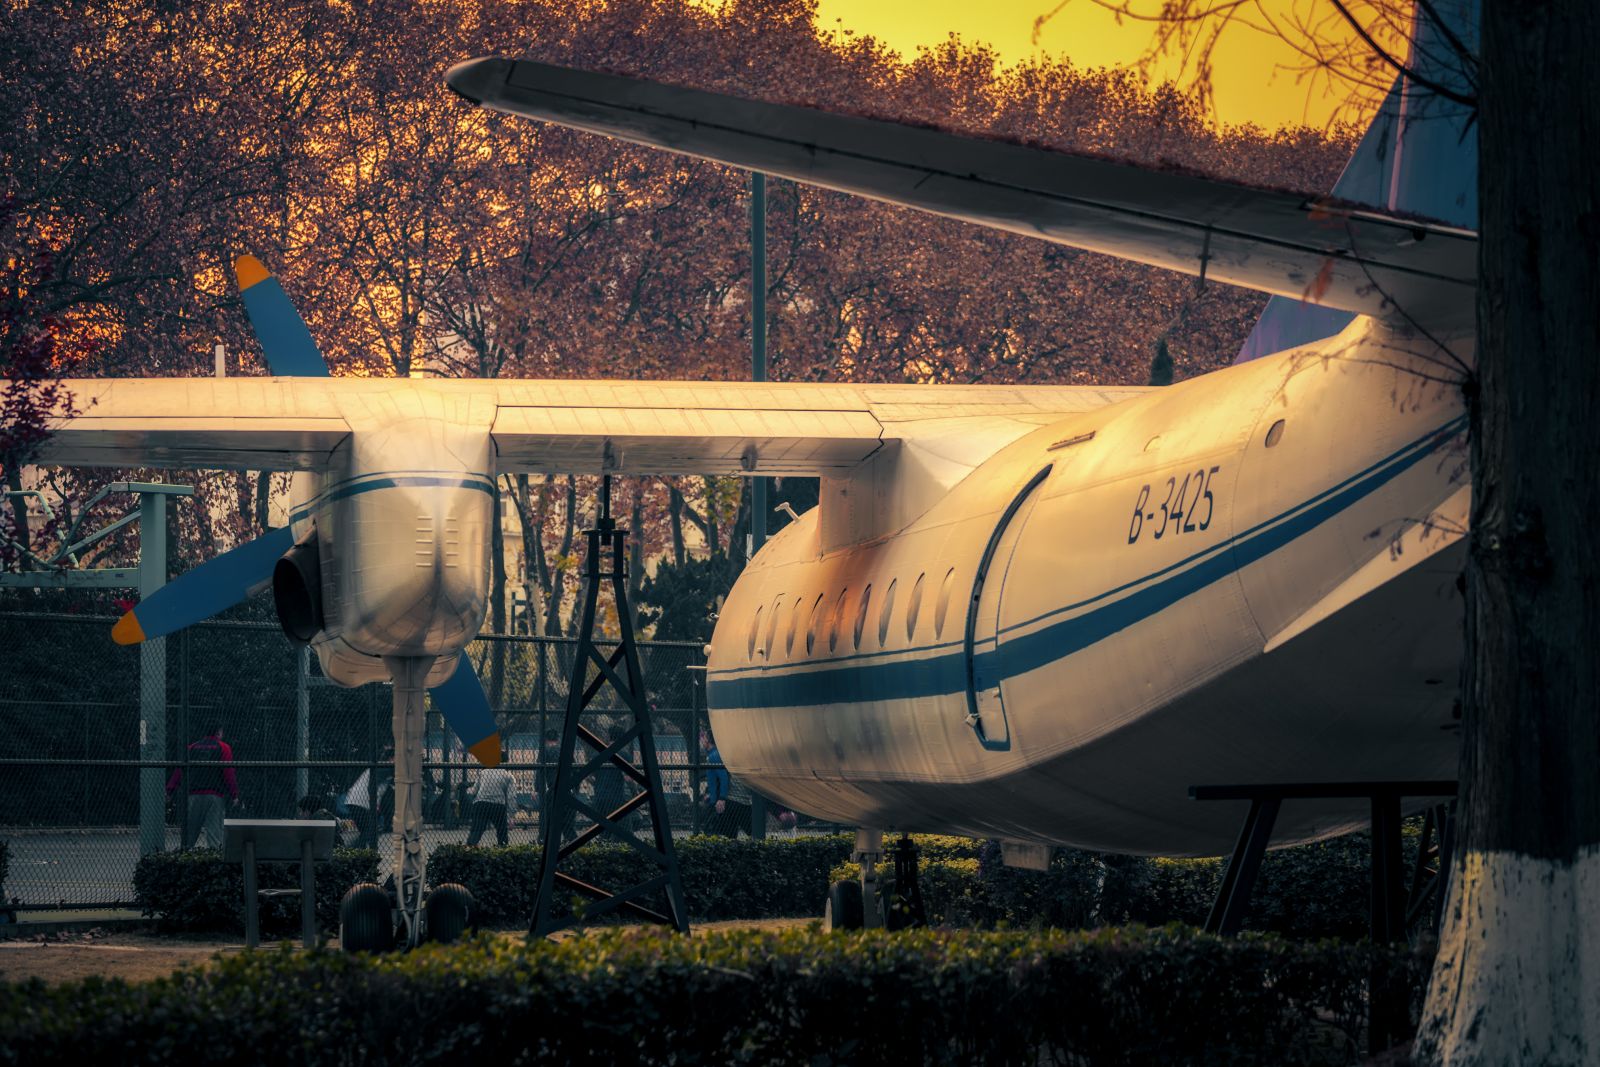 Plane Model, Beijing Aviation Museum